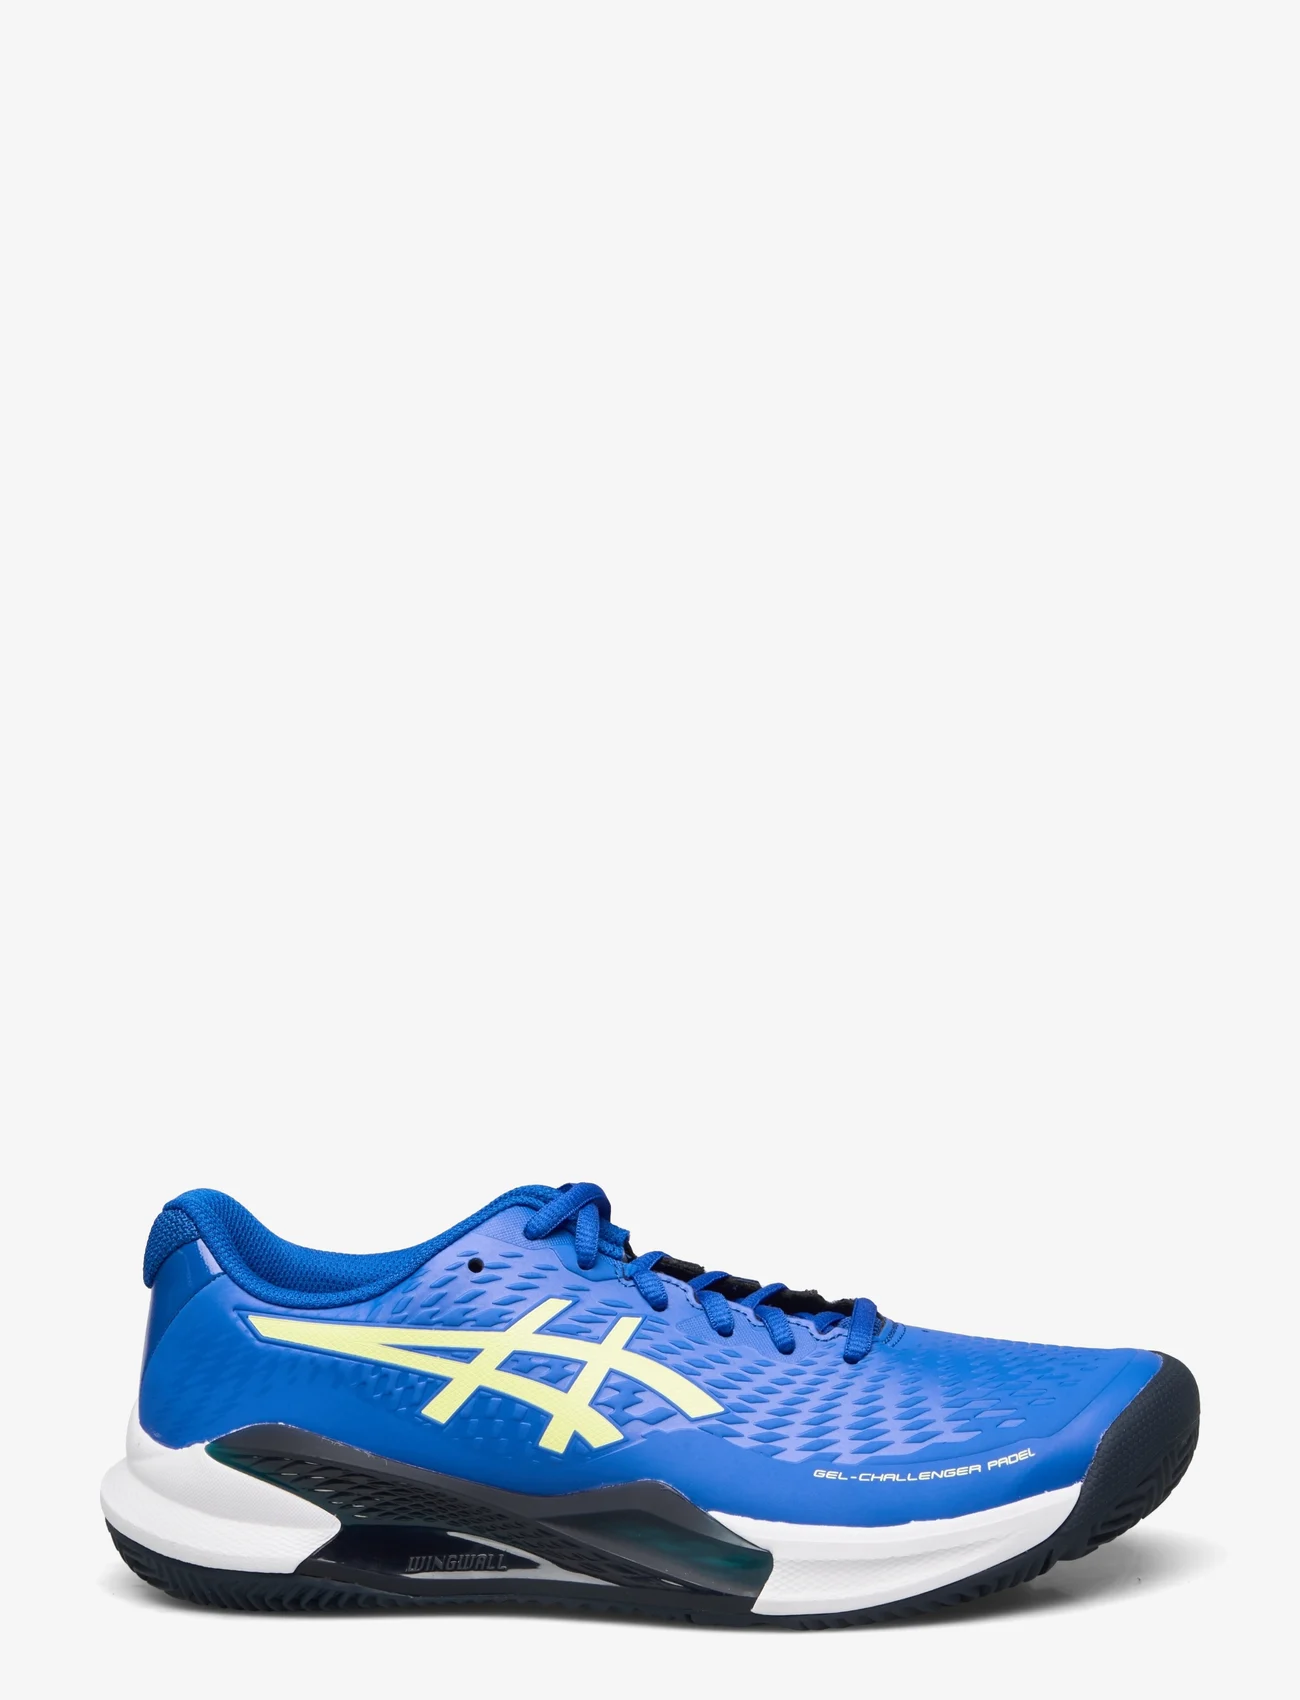 Asics - GEL-CHALLENGER 14 PADEL - racketsports shoes - illusion blue/glow yellow - 1